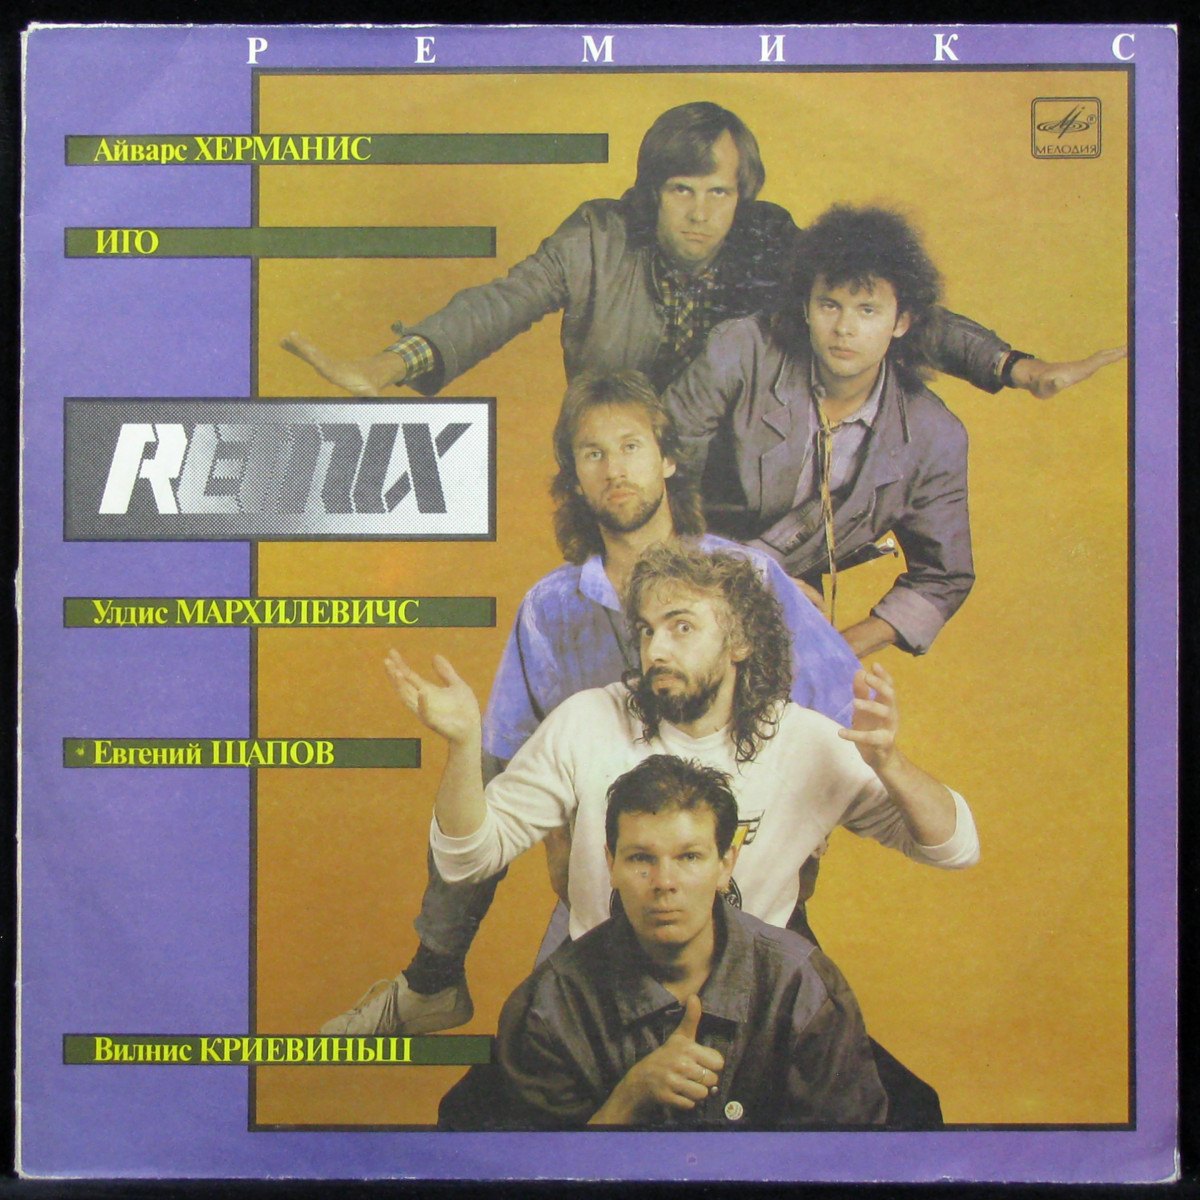 LP Remix — Поёт Иго фото